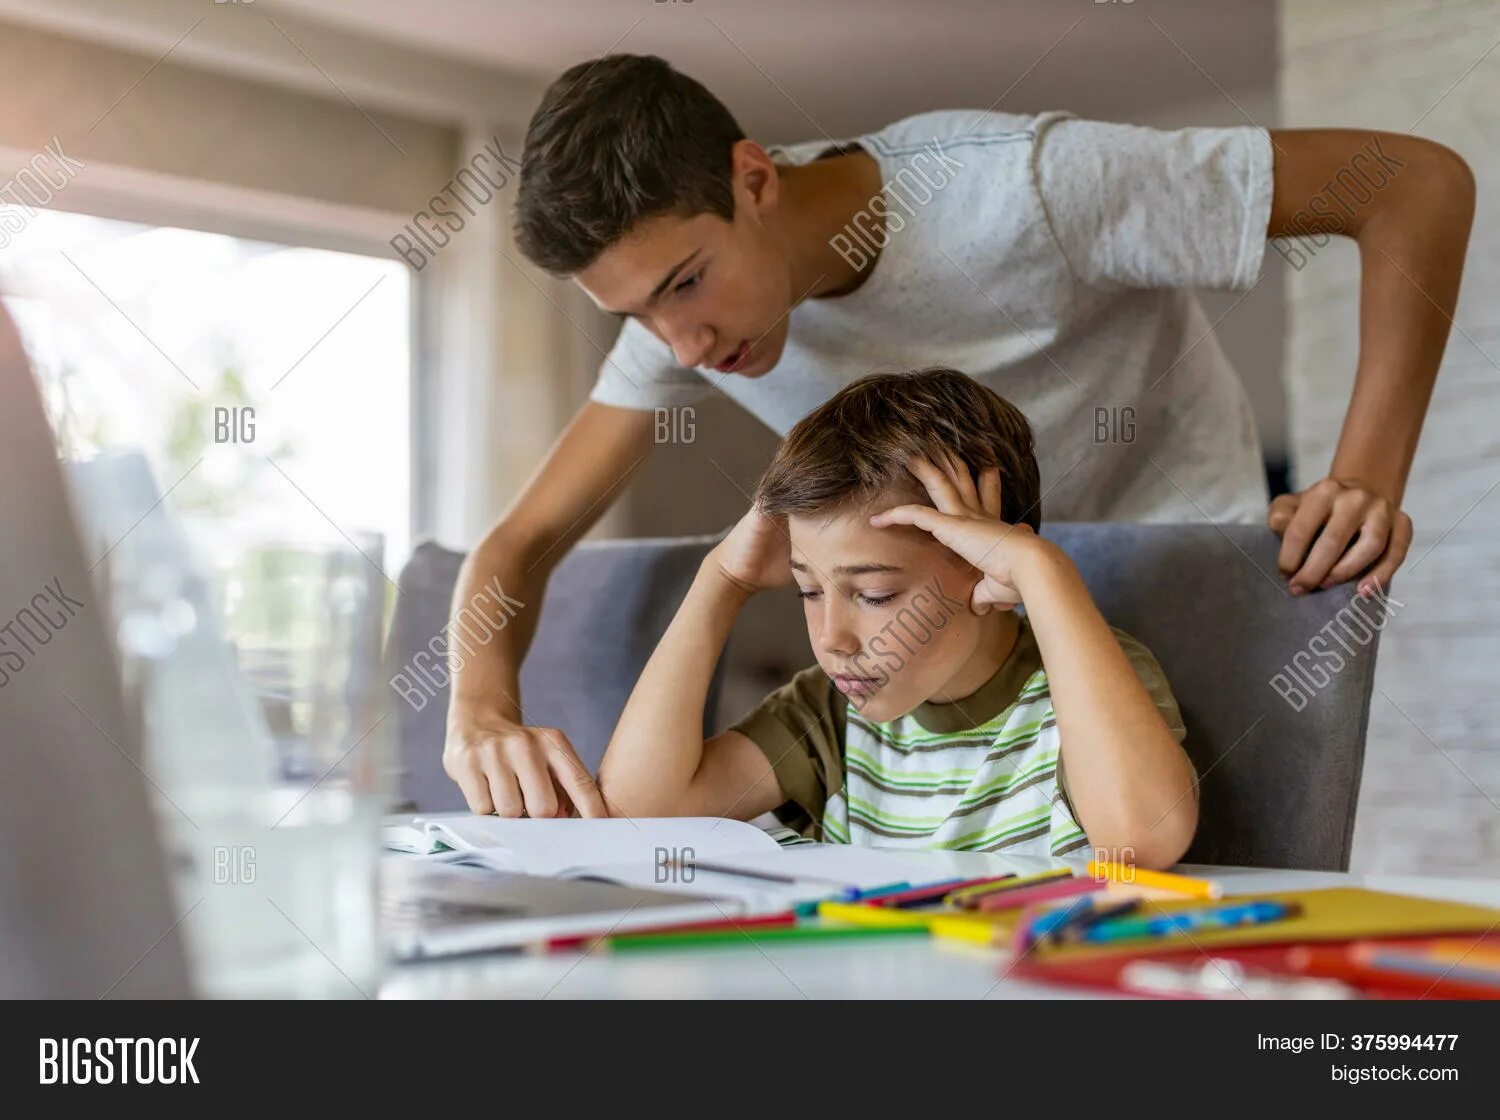 He is that his brother. Помощь младшему брату. Младший брат делает уроки. Старший брат помогает делать уроки. Помощь младшей сестре делать уроки.